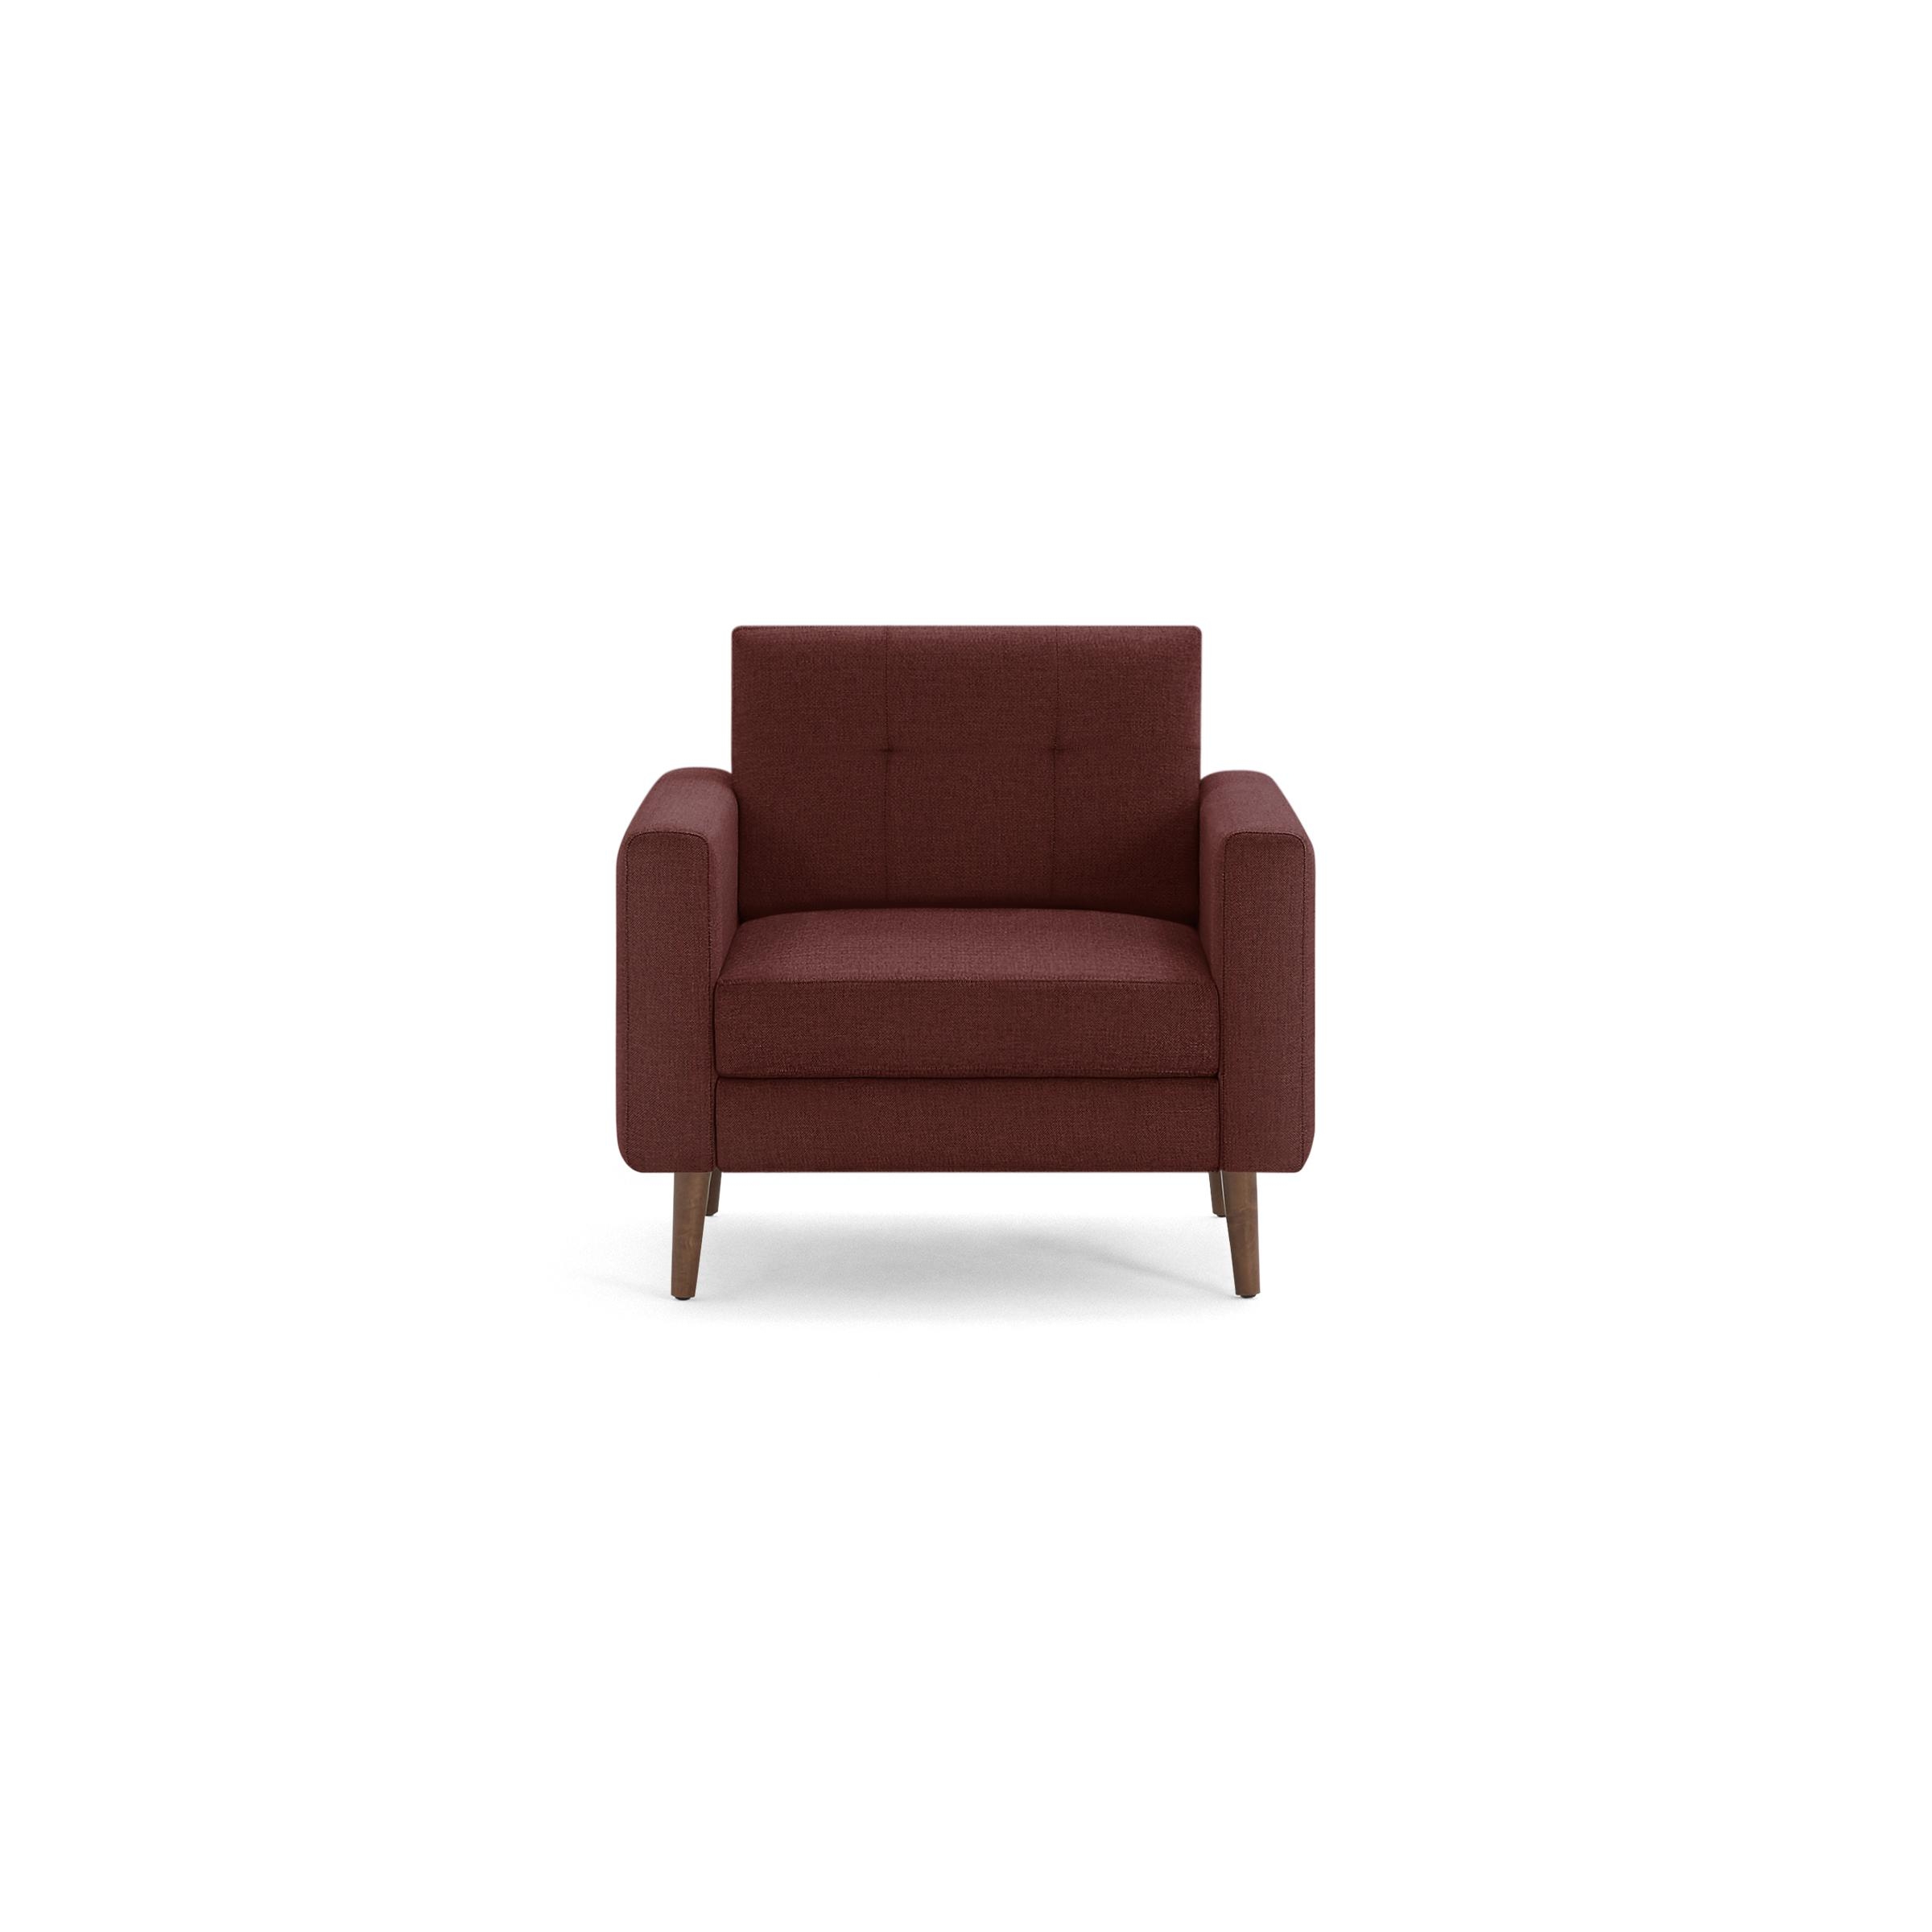 Nomad Armchair in Brick Red, Walnut Legs, Leg Finish: WalnutLegs - Image 0